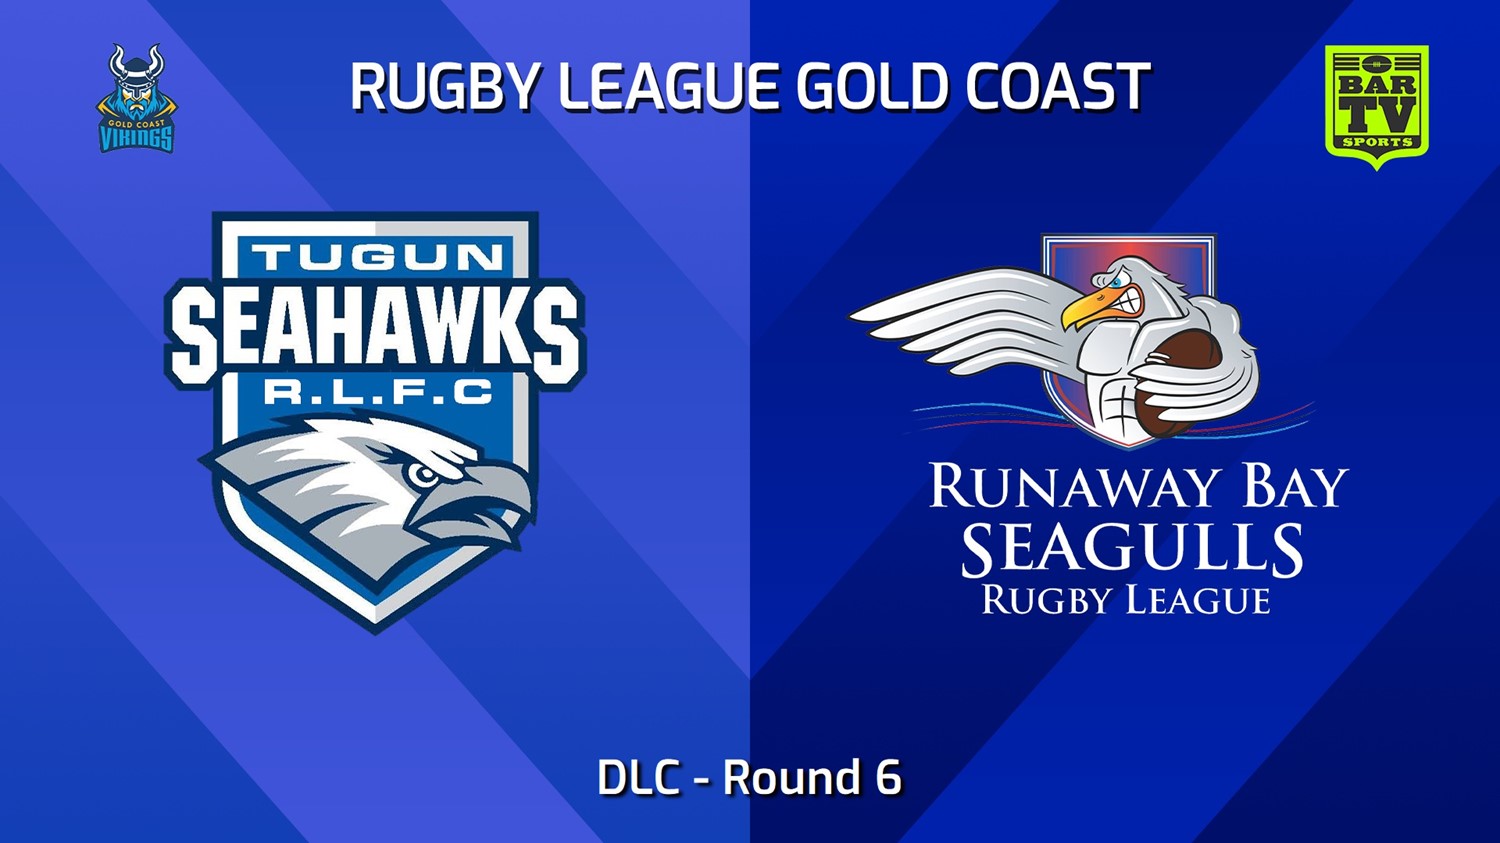 240601-video-Gold Coast Round 6 - DLC - Tugun Seahawks v Runaway Bay Seagulls Slate Image